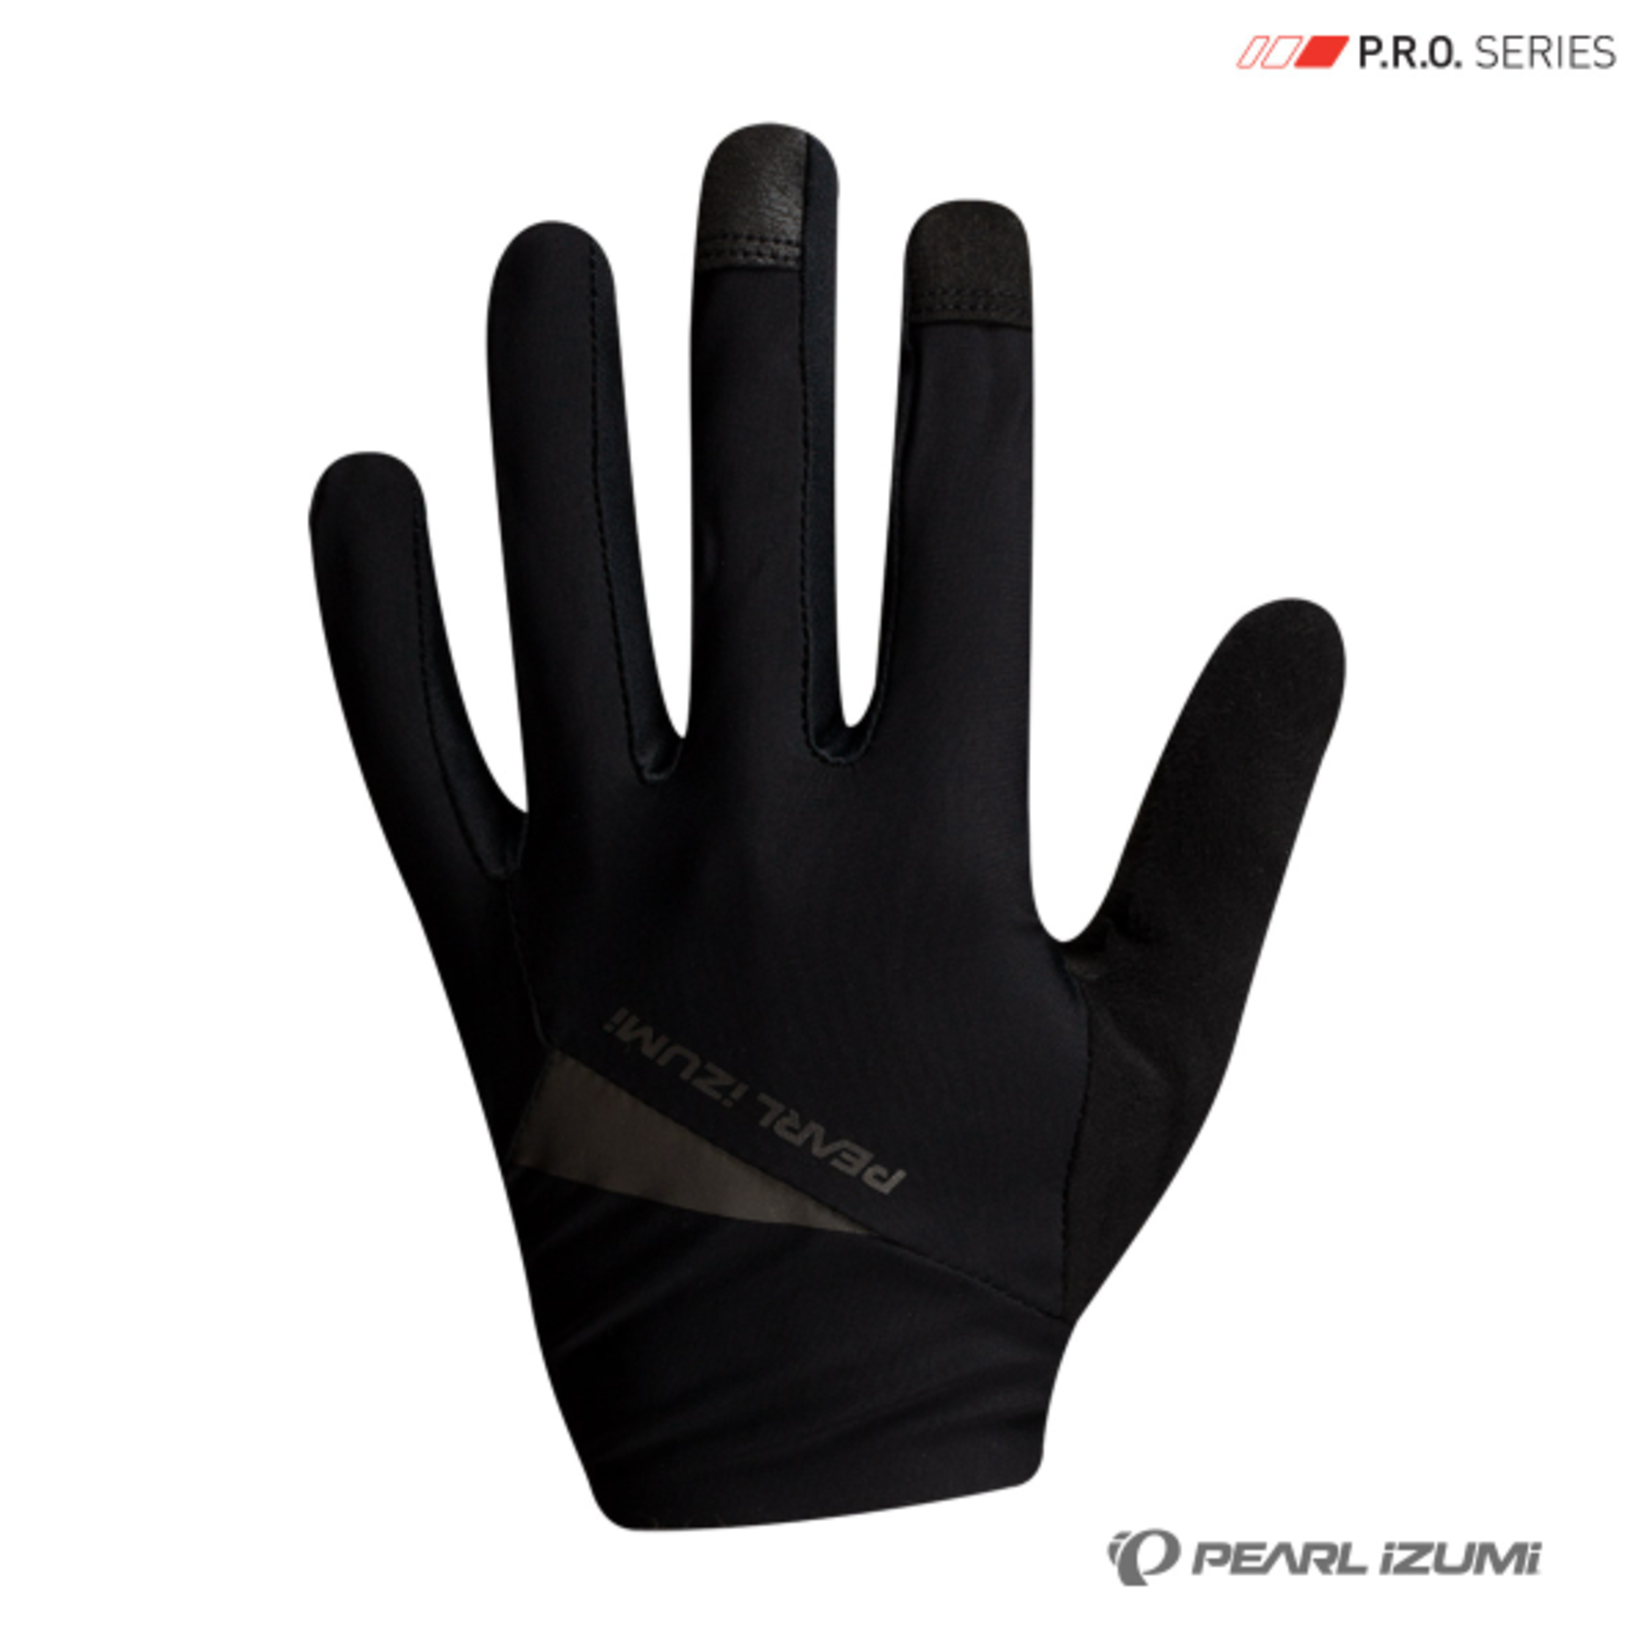 Pearl Izumi Pearl Izumi Pro Gel FF Bike Gloves - Black Synthetic Leather